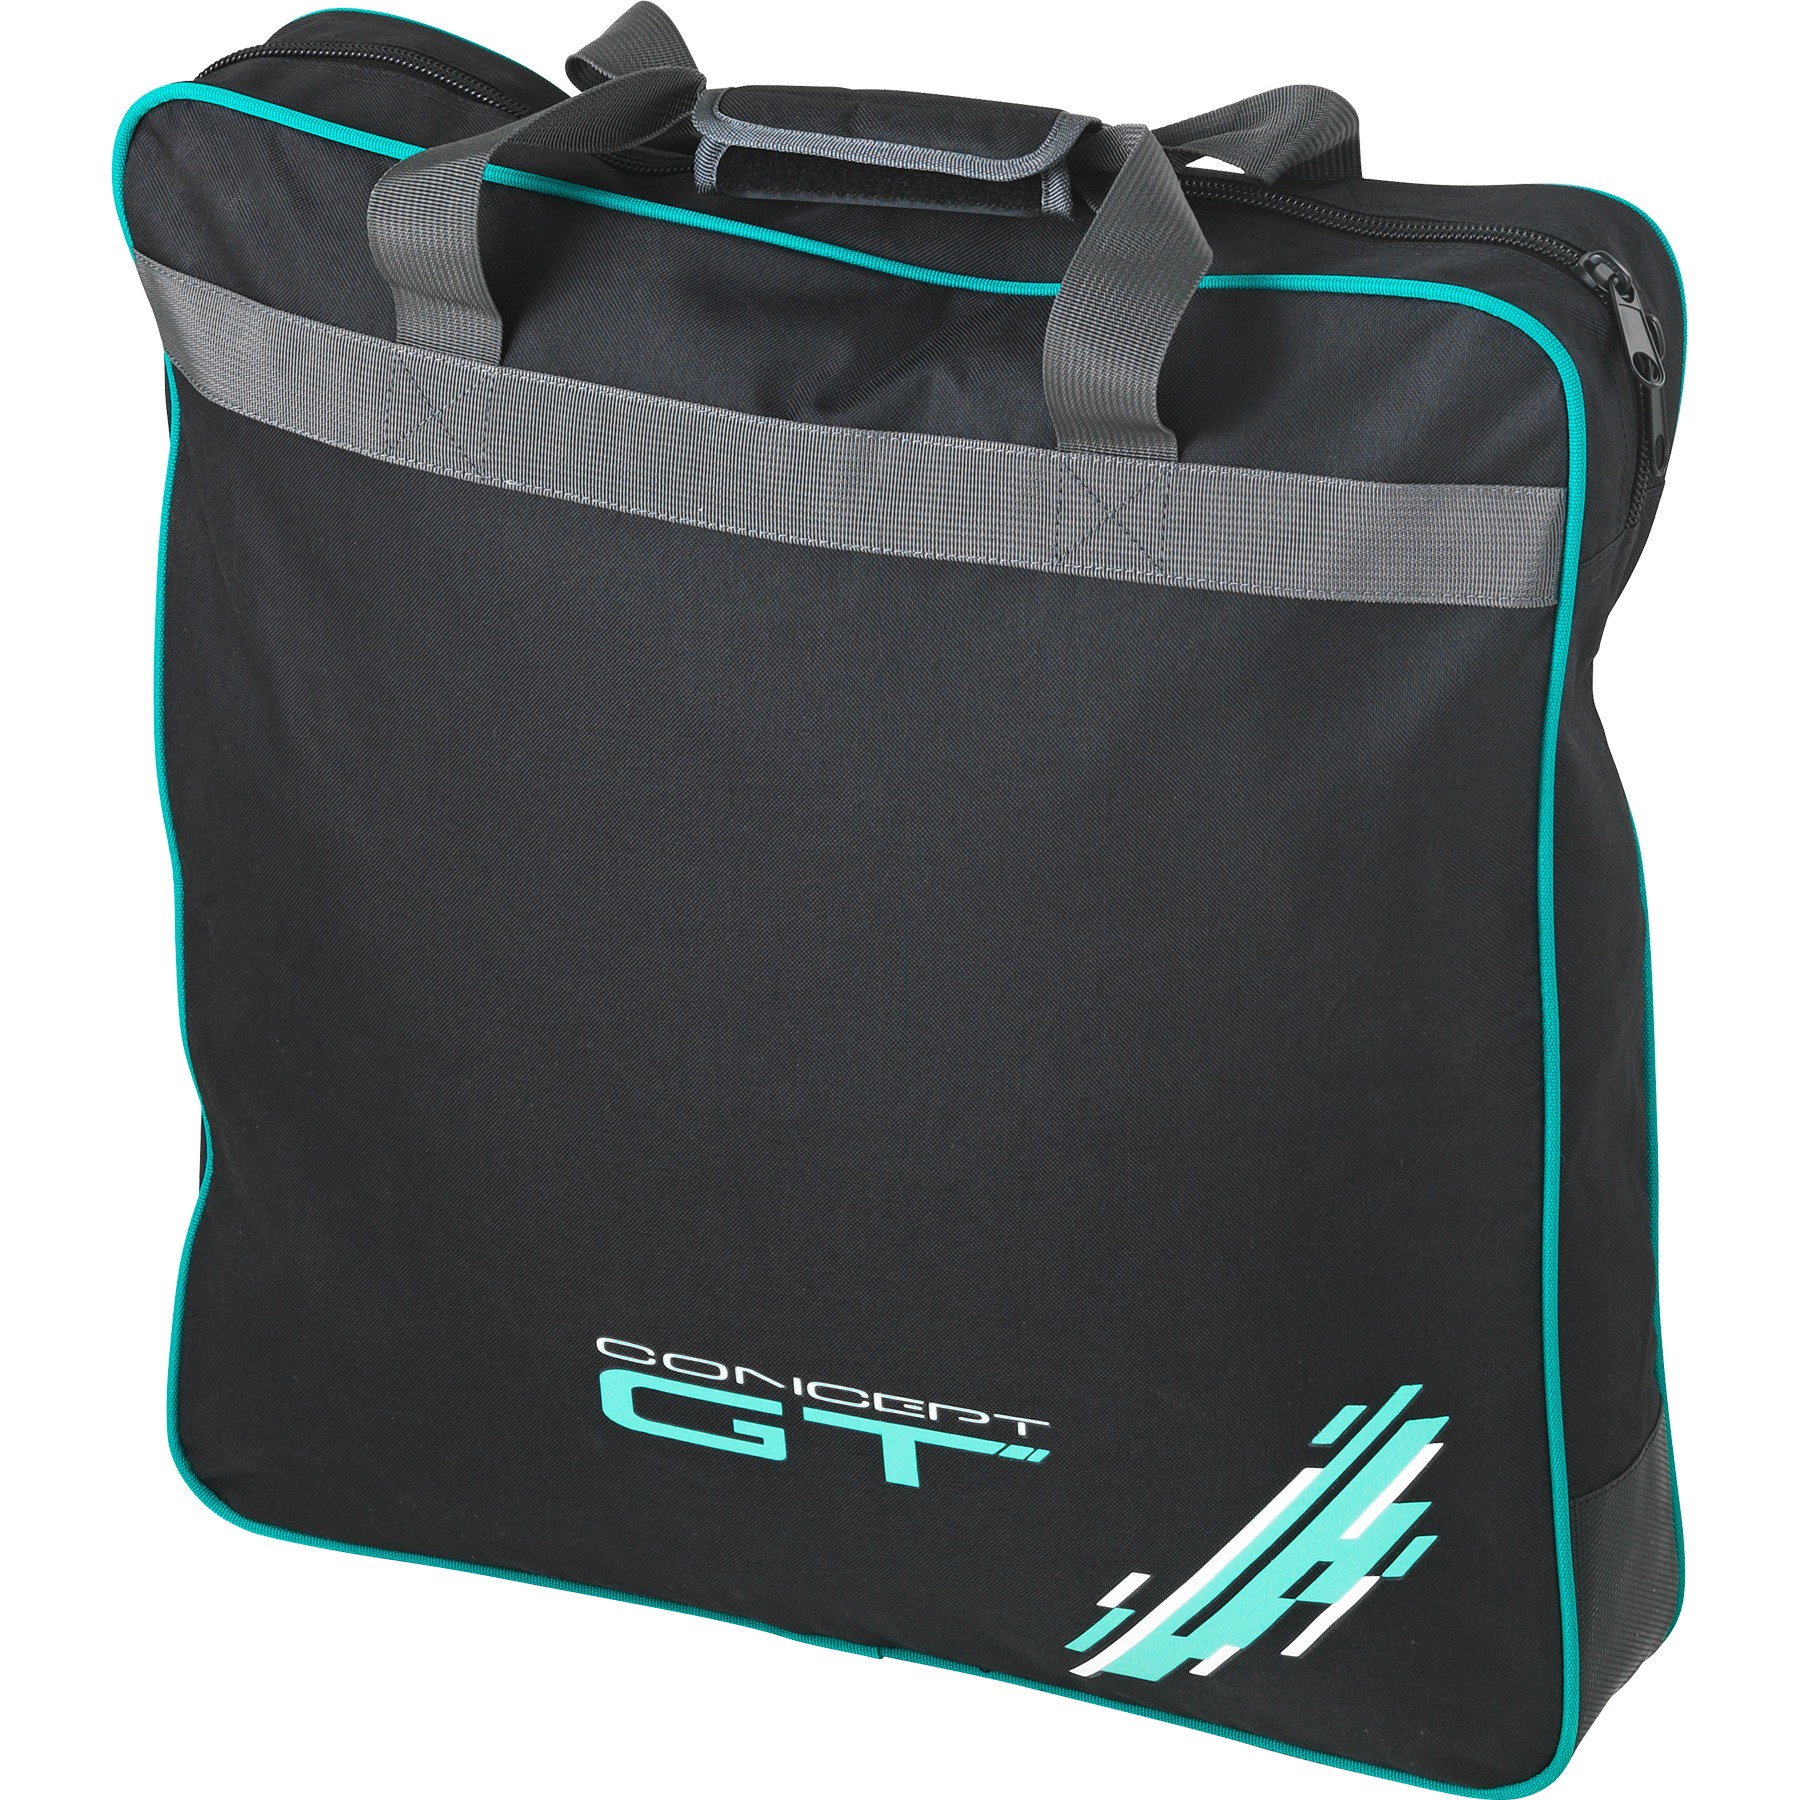 Leeda Concept GT Single Net Bag - Click Image to Close